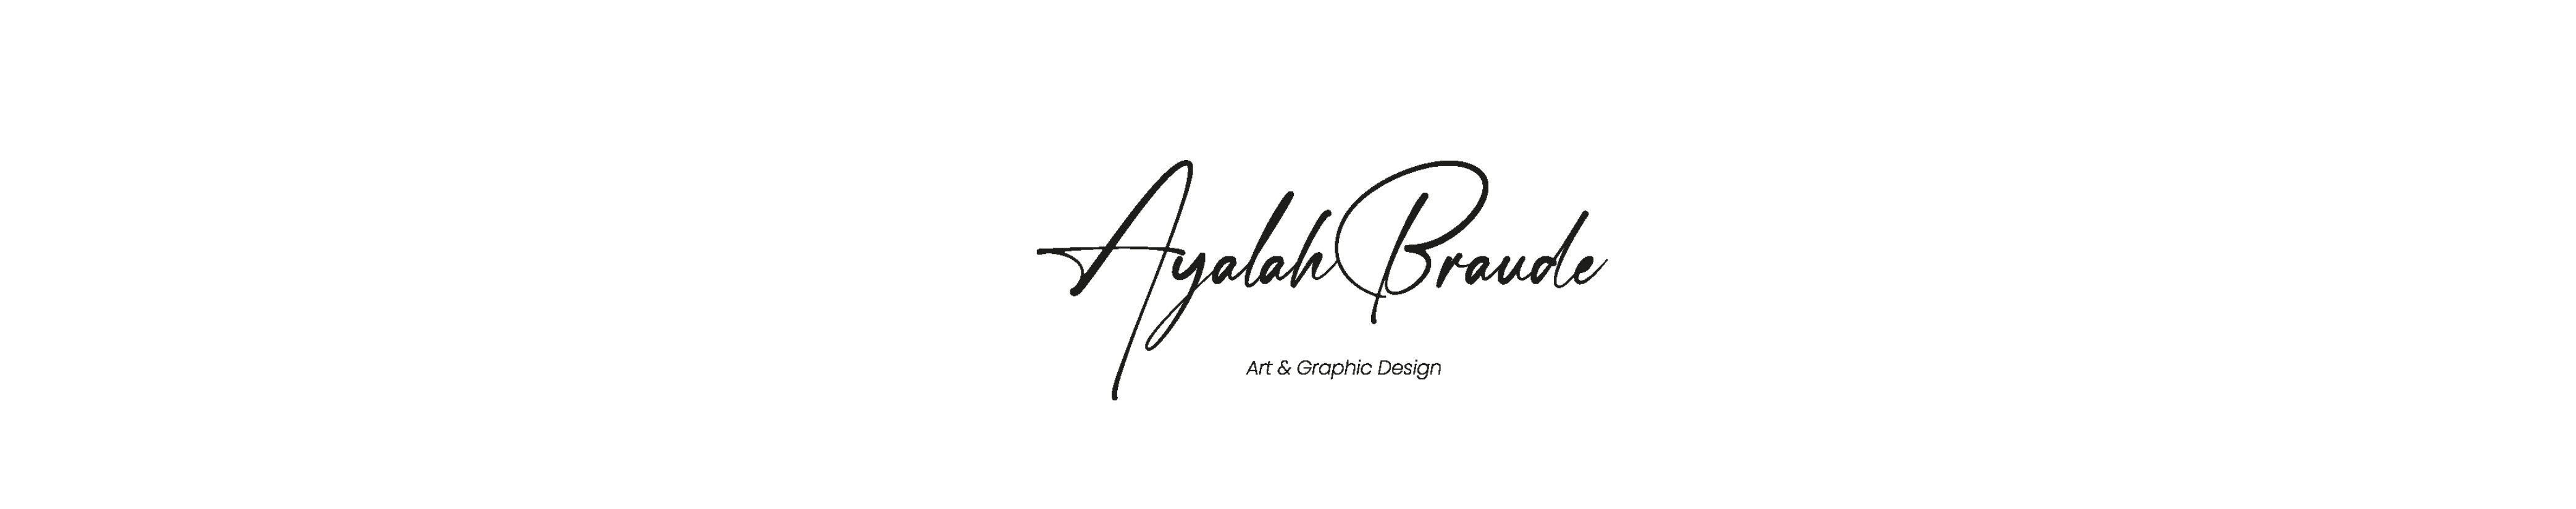 Profielbanner van Ayalah Braude